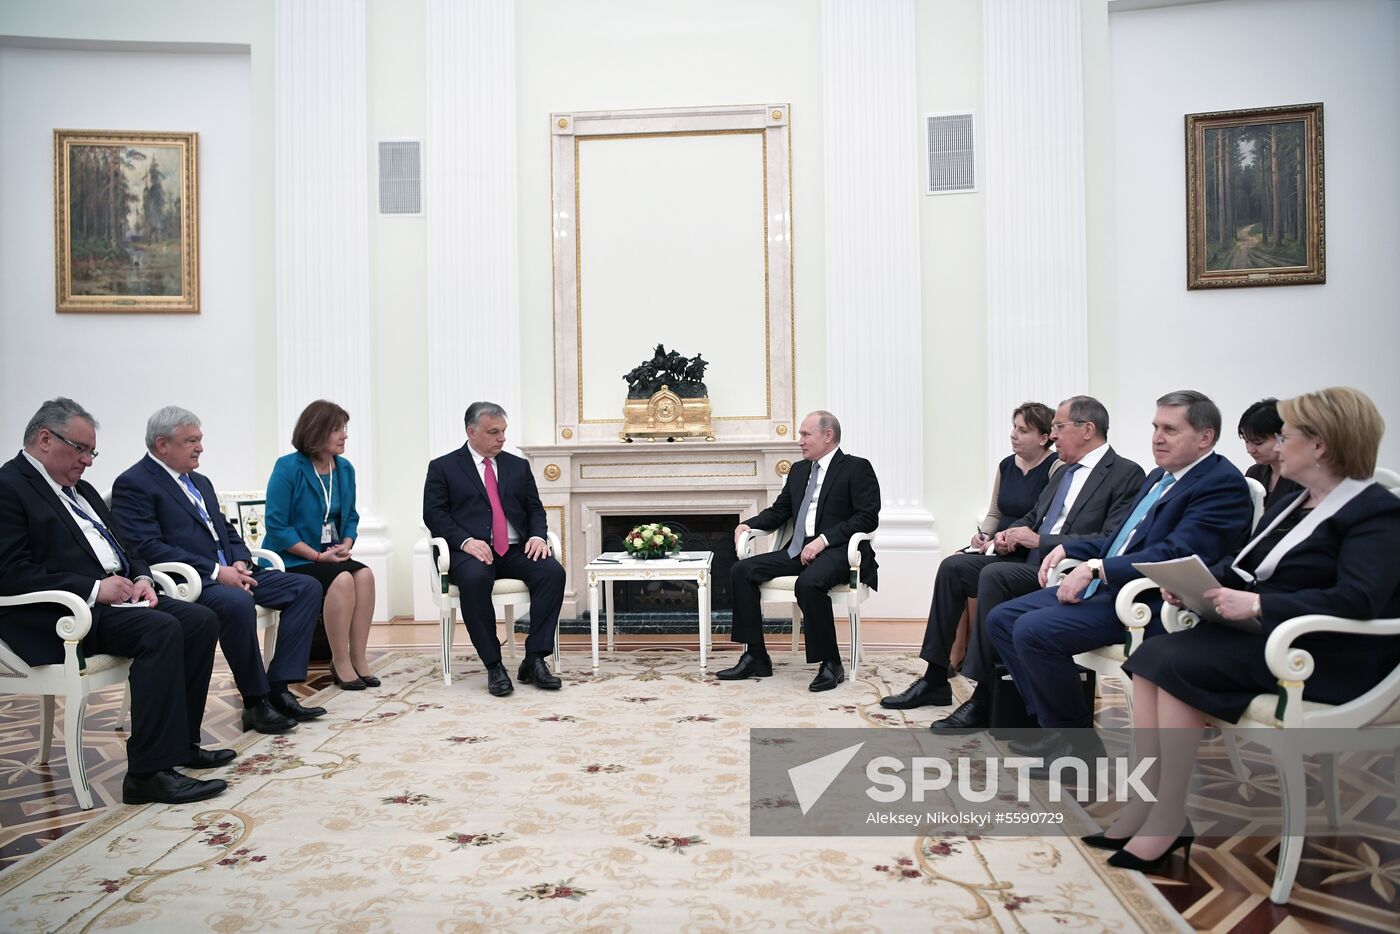 Russian President Vladimir Putin meets with Hungarian Prime Minister Viktor Orban